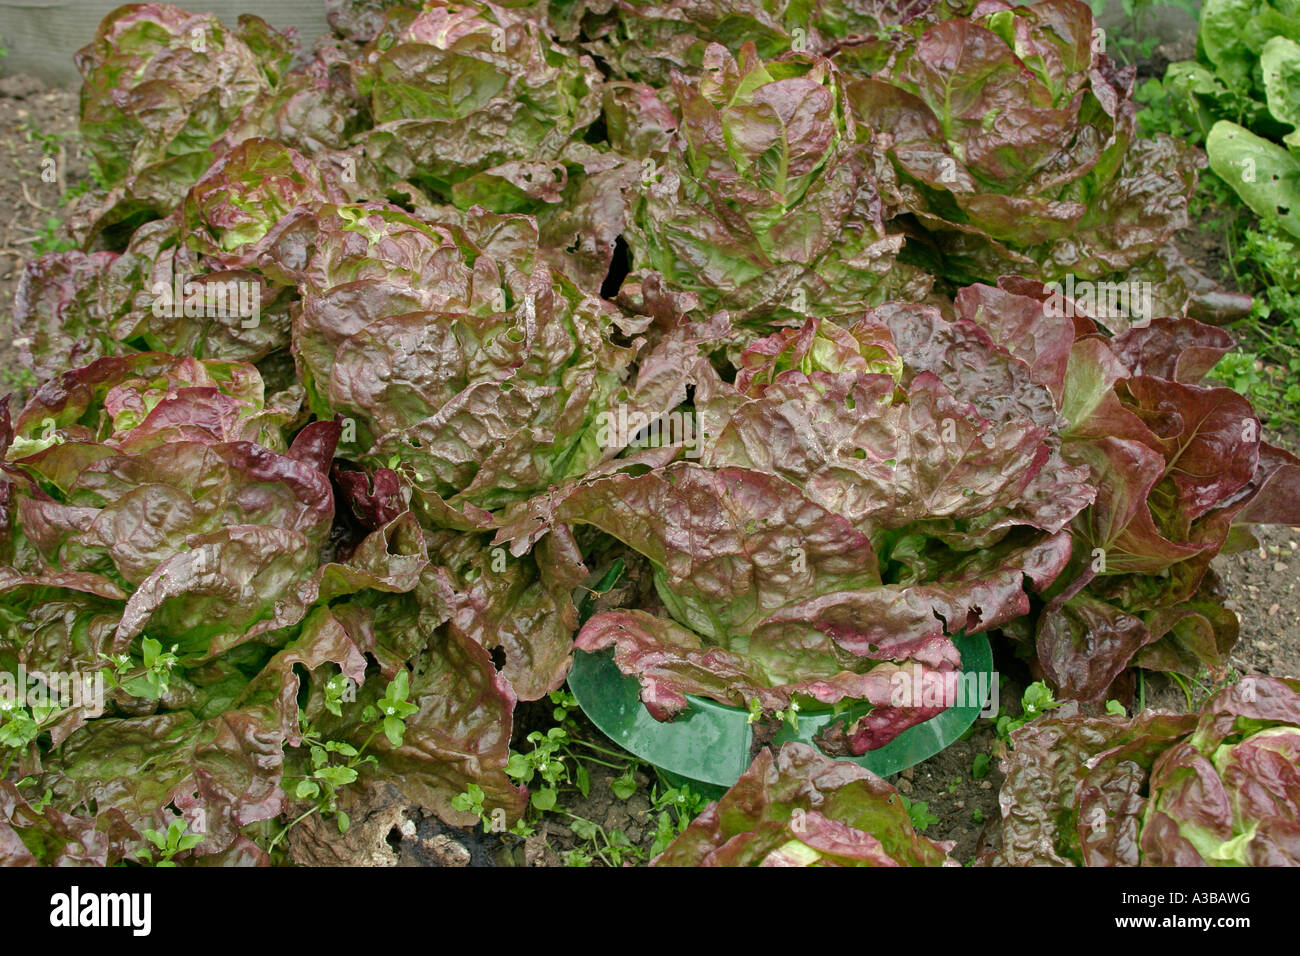 Slug protection bottle cloche barrier showing mature crop of lettuce Stock Photo